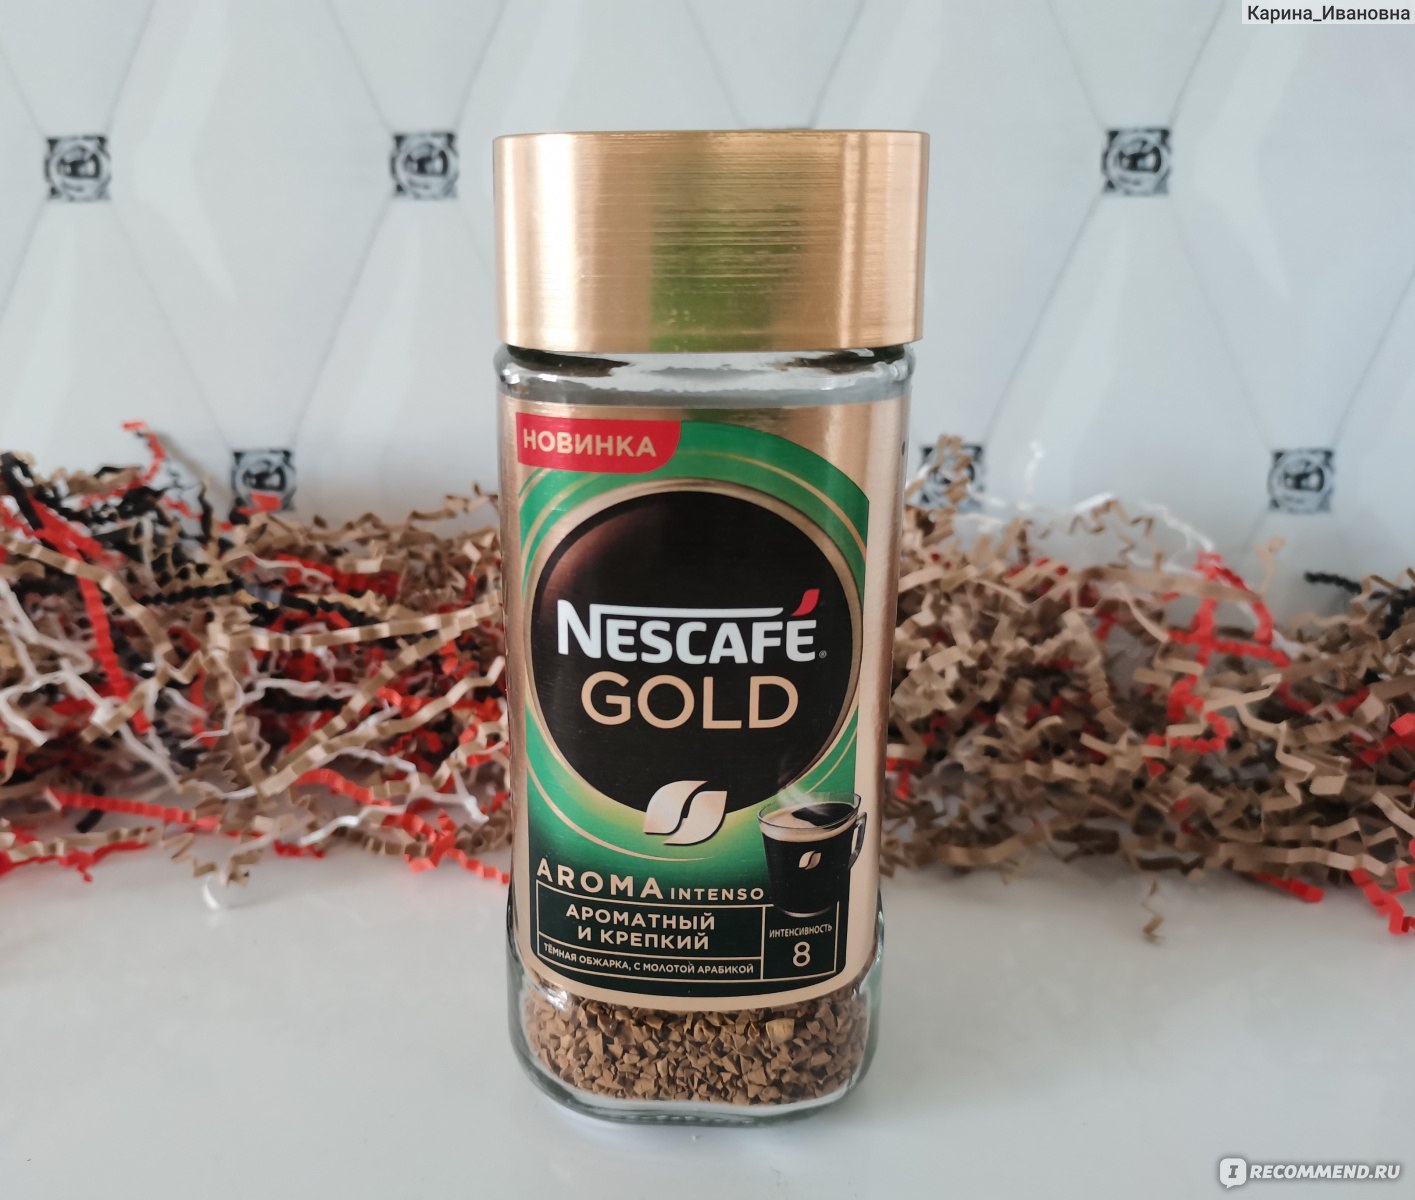 Nescafe gold aroma intenso. Nescafe Gold Aroma 190+100. Нескафе насыщенный вкус. Nescafe Gold Aroma 190+100 PNG.